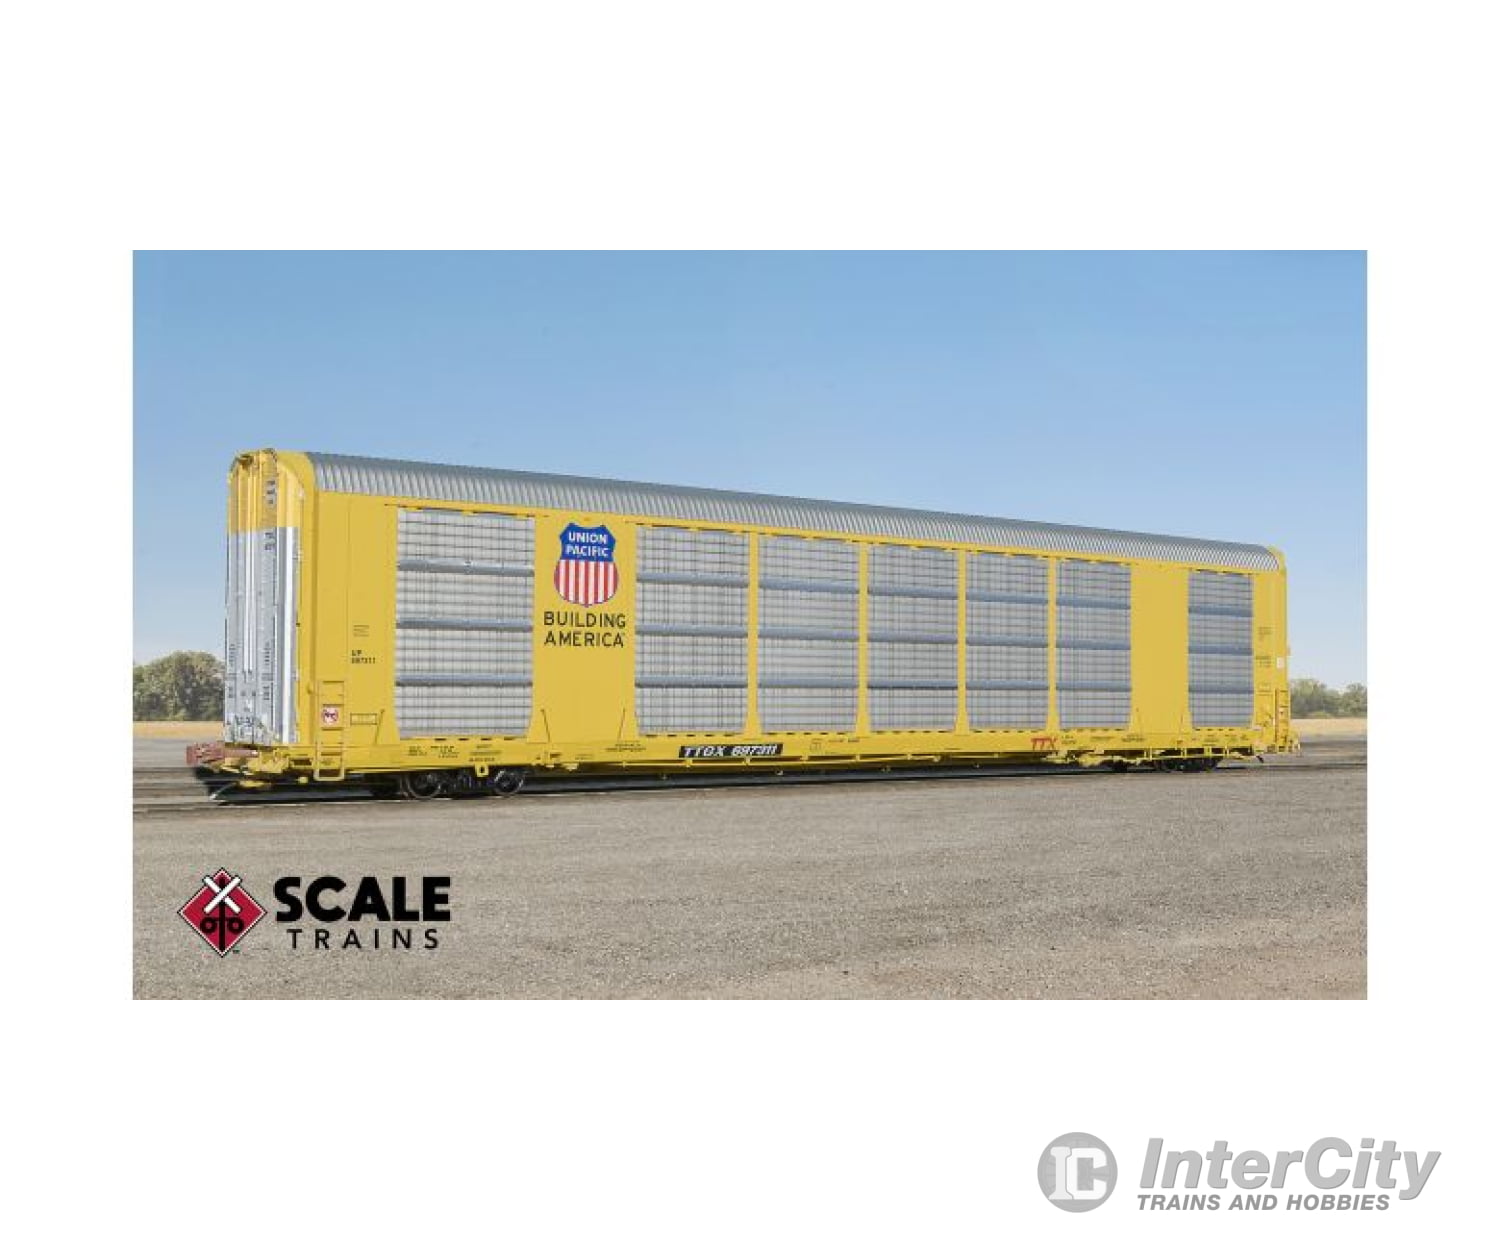 Scale Trains Sxt32786 Gunderson Multi-Max Autorack Union Pacific/Building America/Ttgx Rd# Ttgx